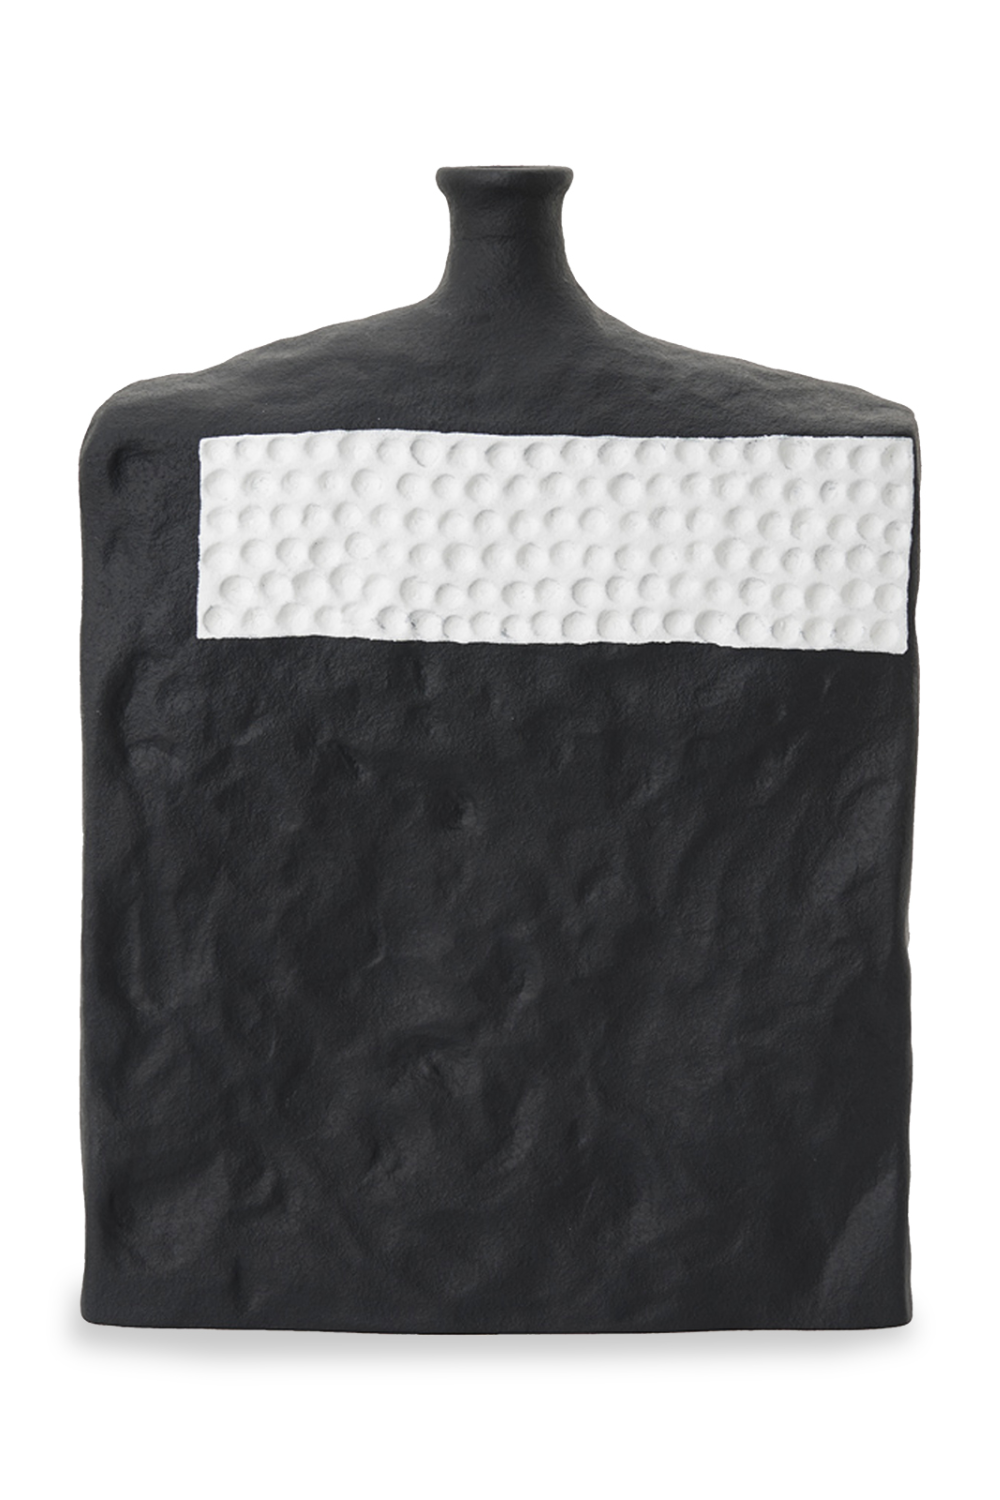 Black Textured Ceramic Vase | Liang & Eimil Lydros | Oroa.com